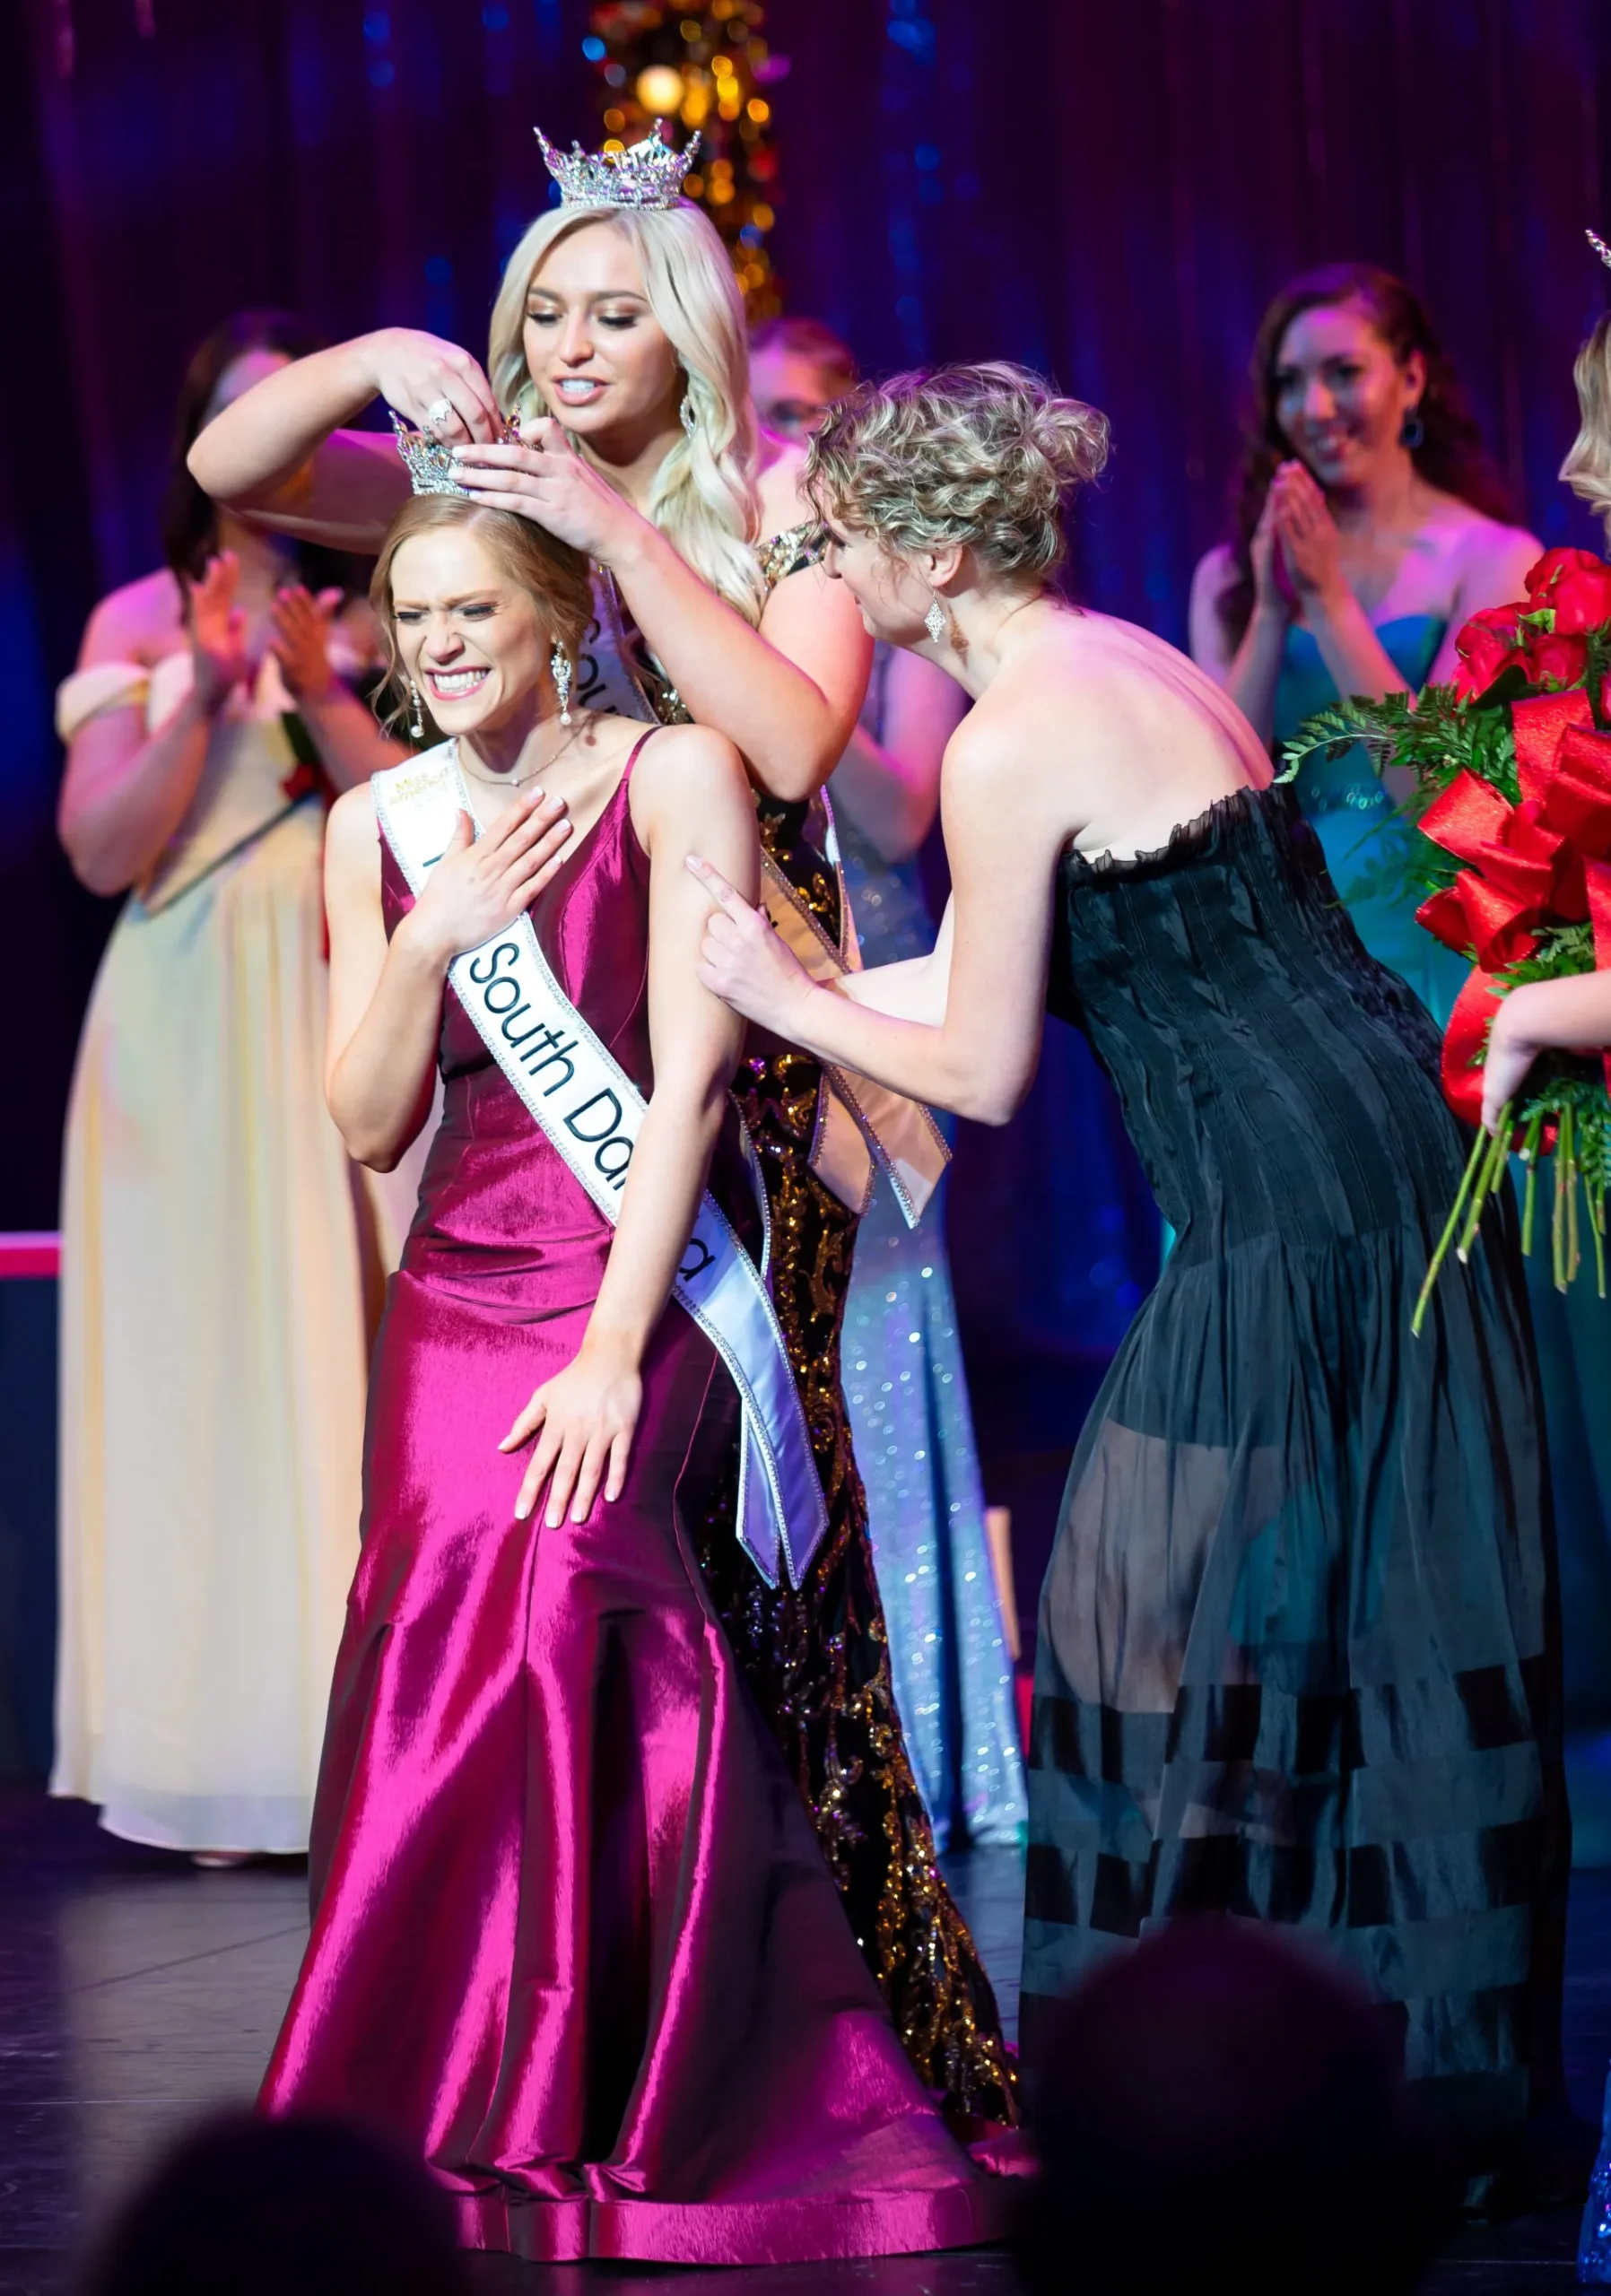 75th Miss South Dakota Scholarship Competition